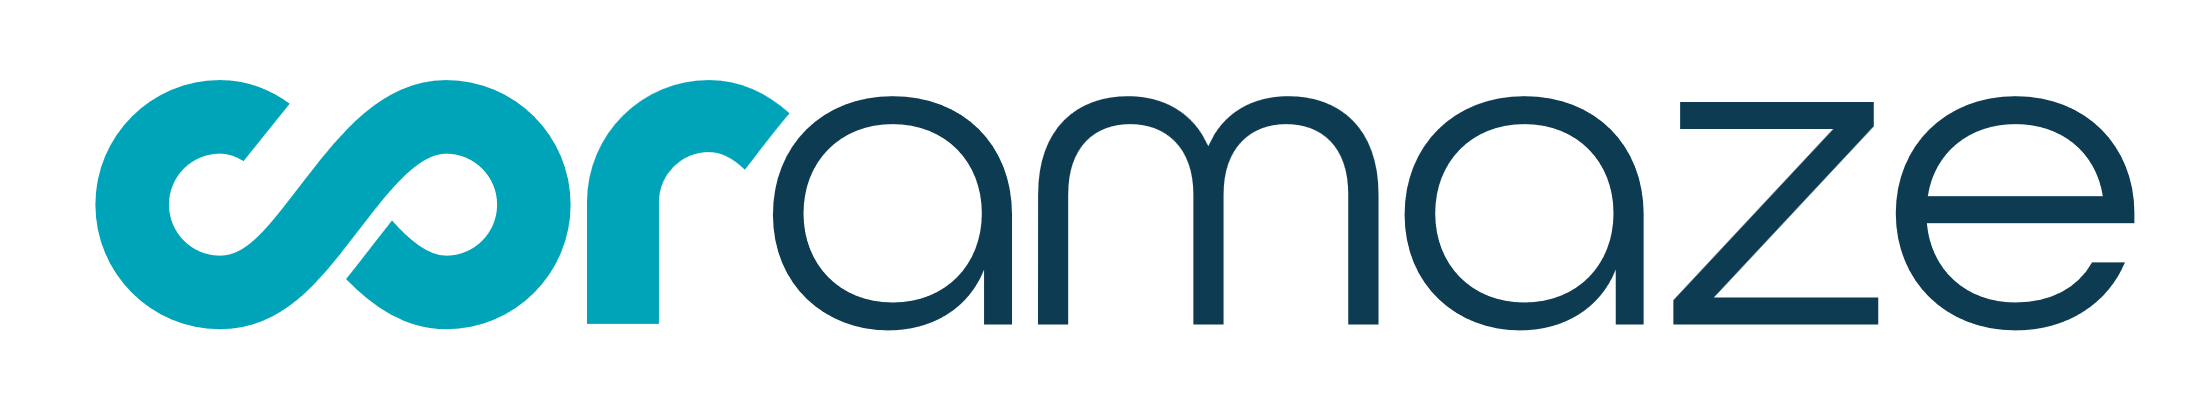 Coramaze Technologies logo